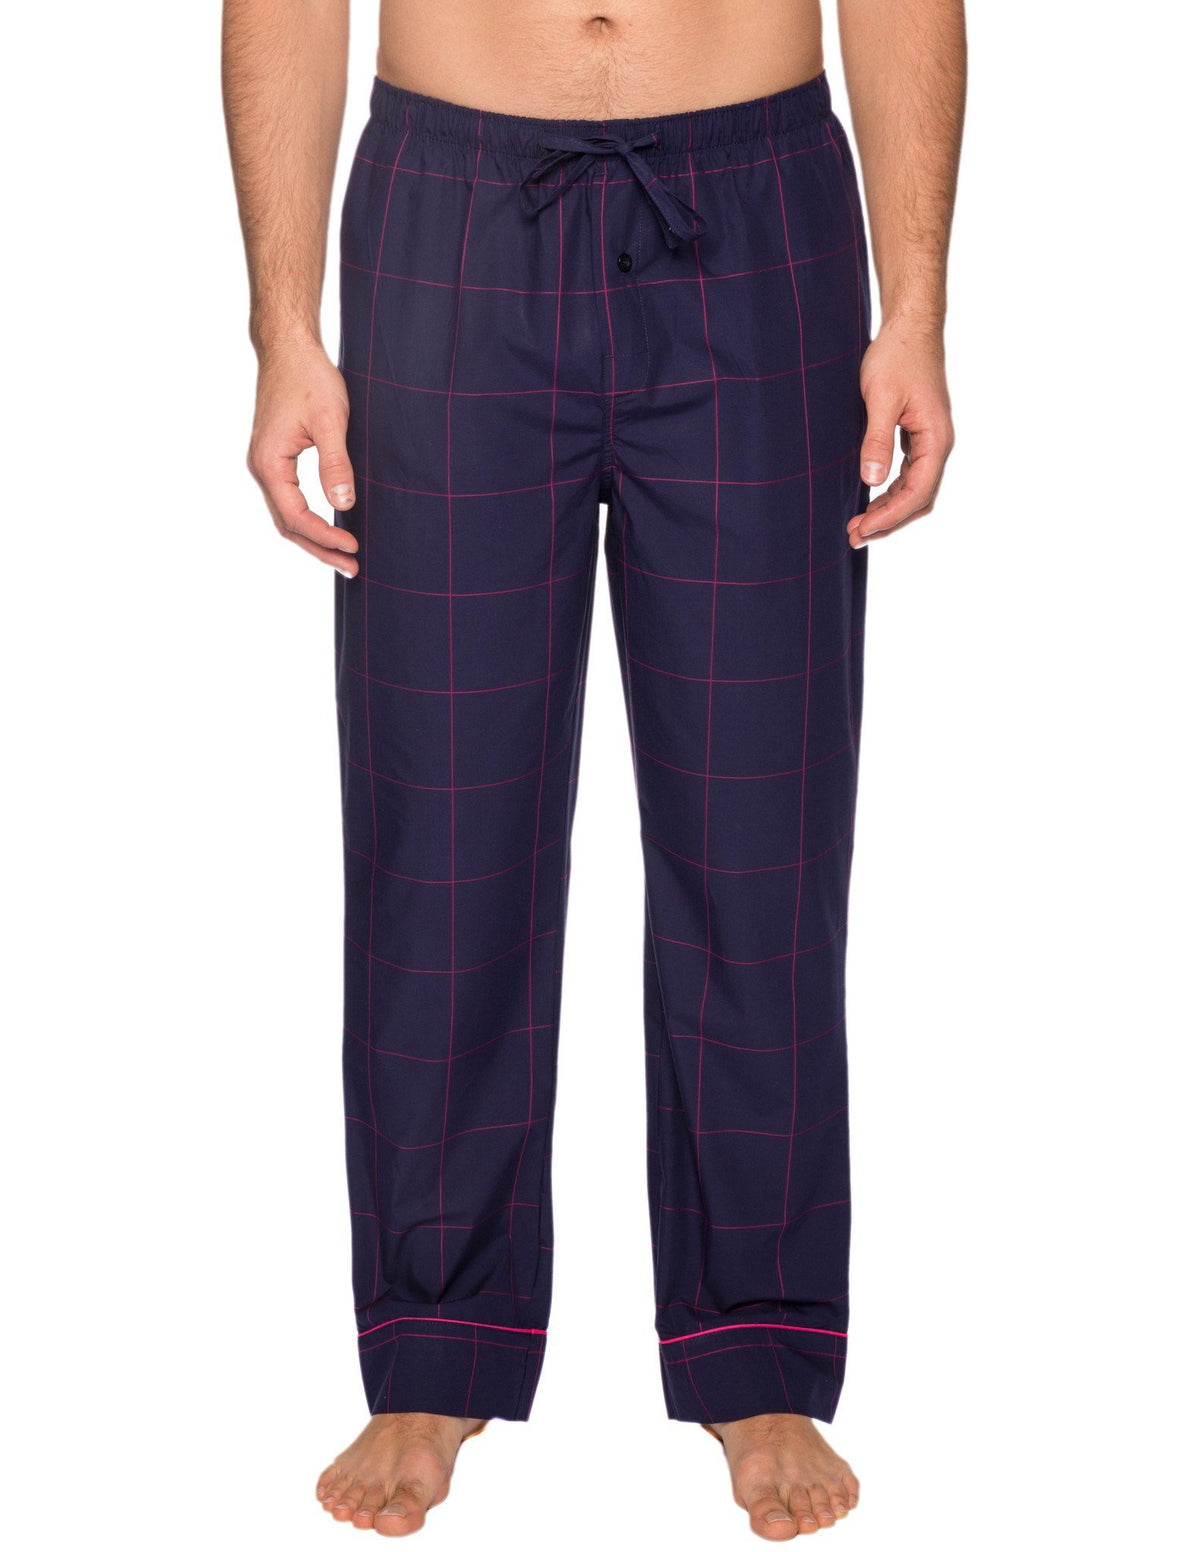 Men's 100% Cotton Comfort-Fit Sleep/Lounge Pants - Windowpane Checks Blue/Red